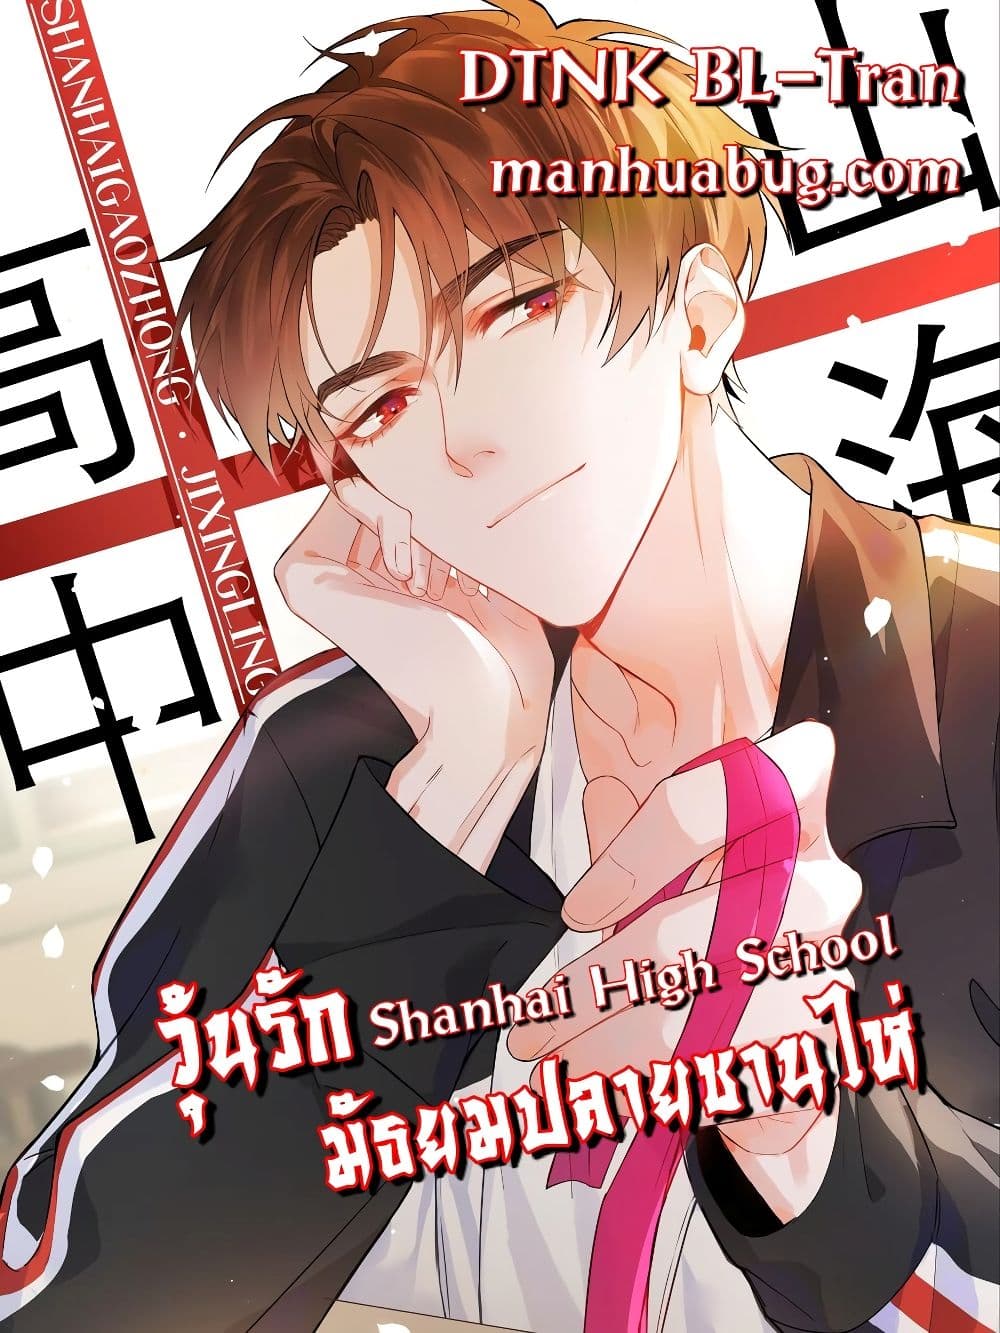 Shanhai High School 24 (1)